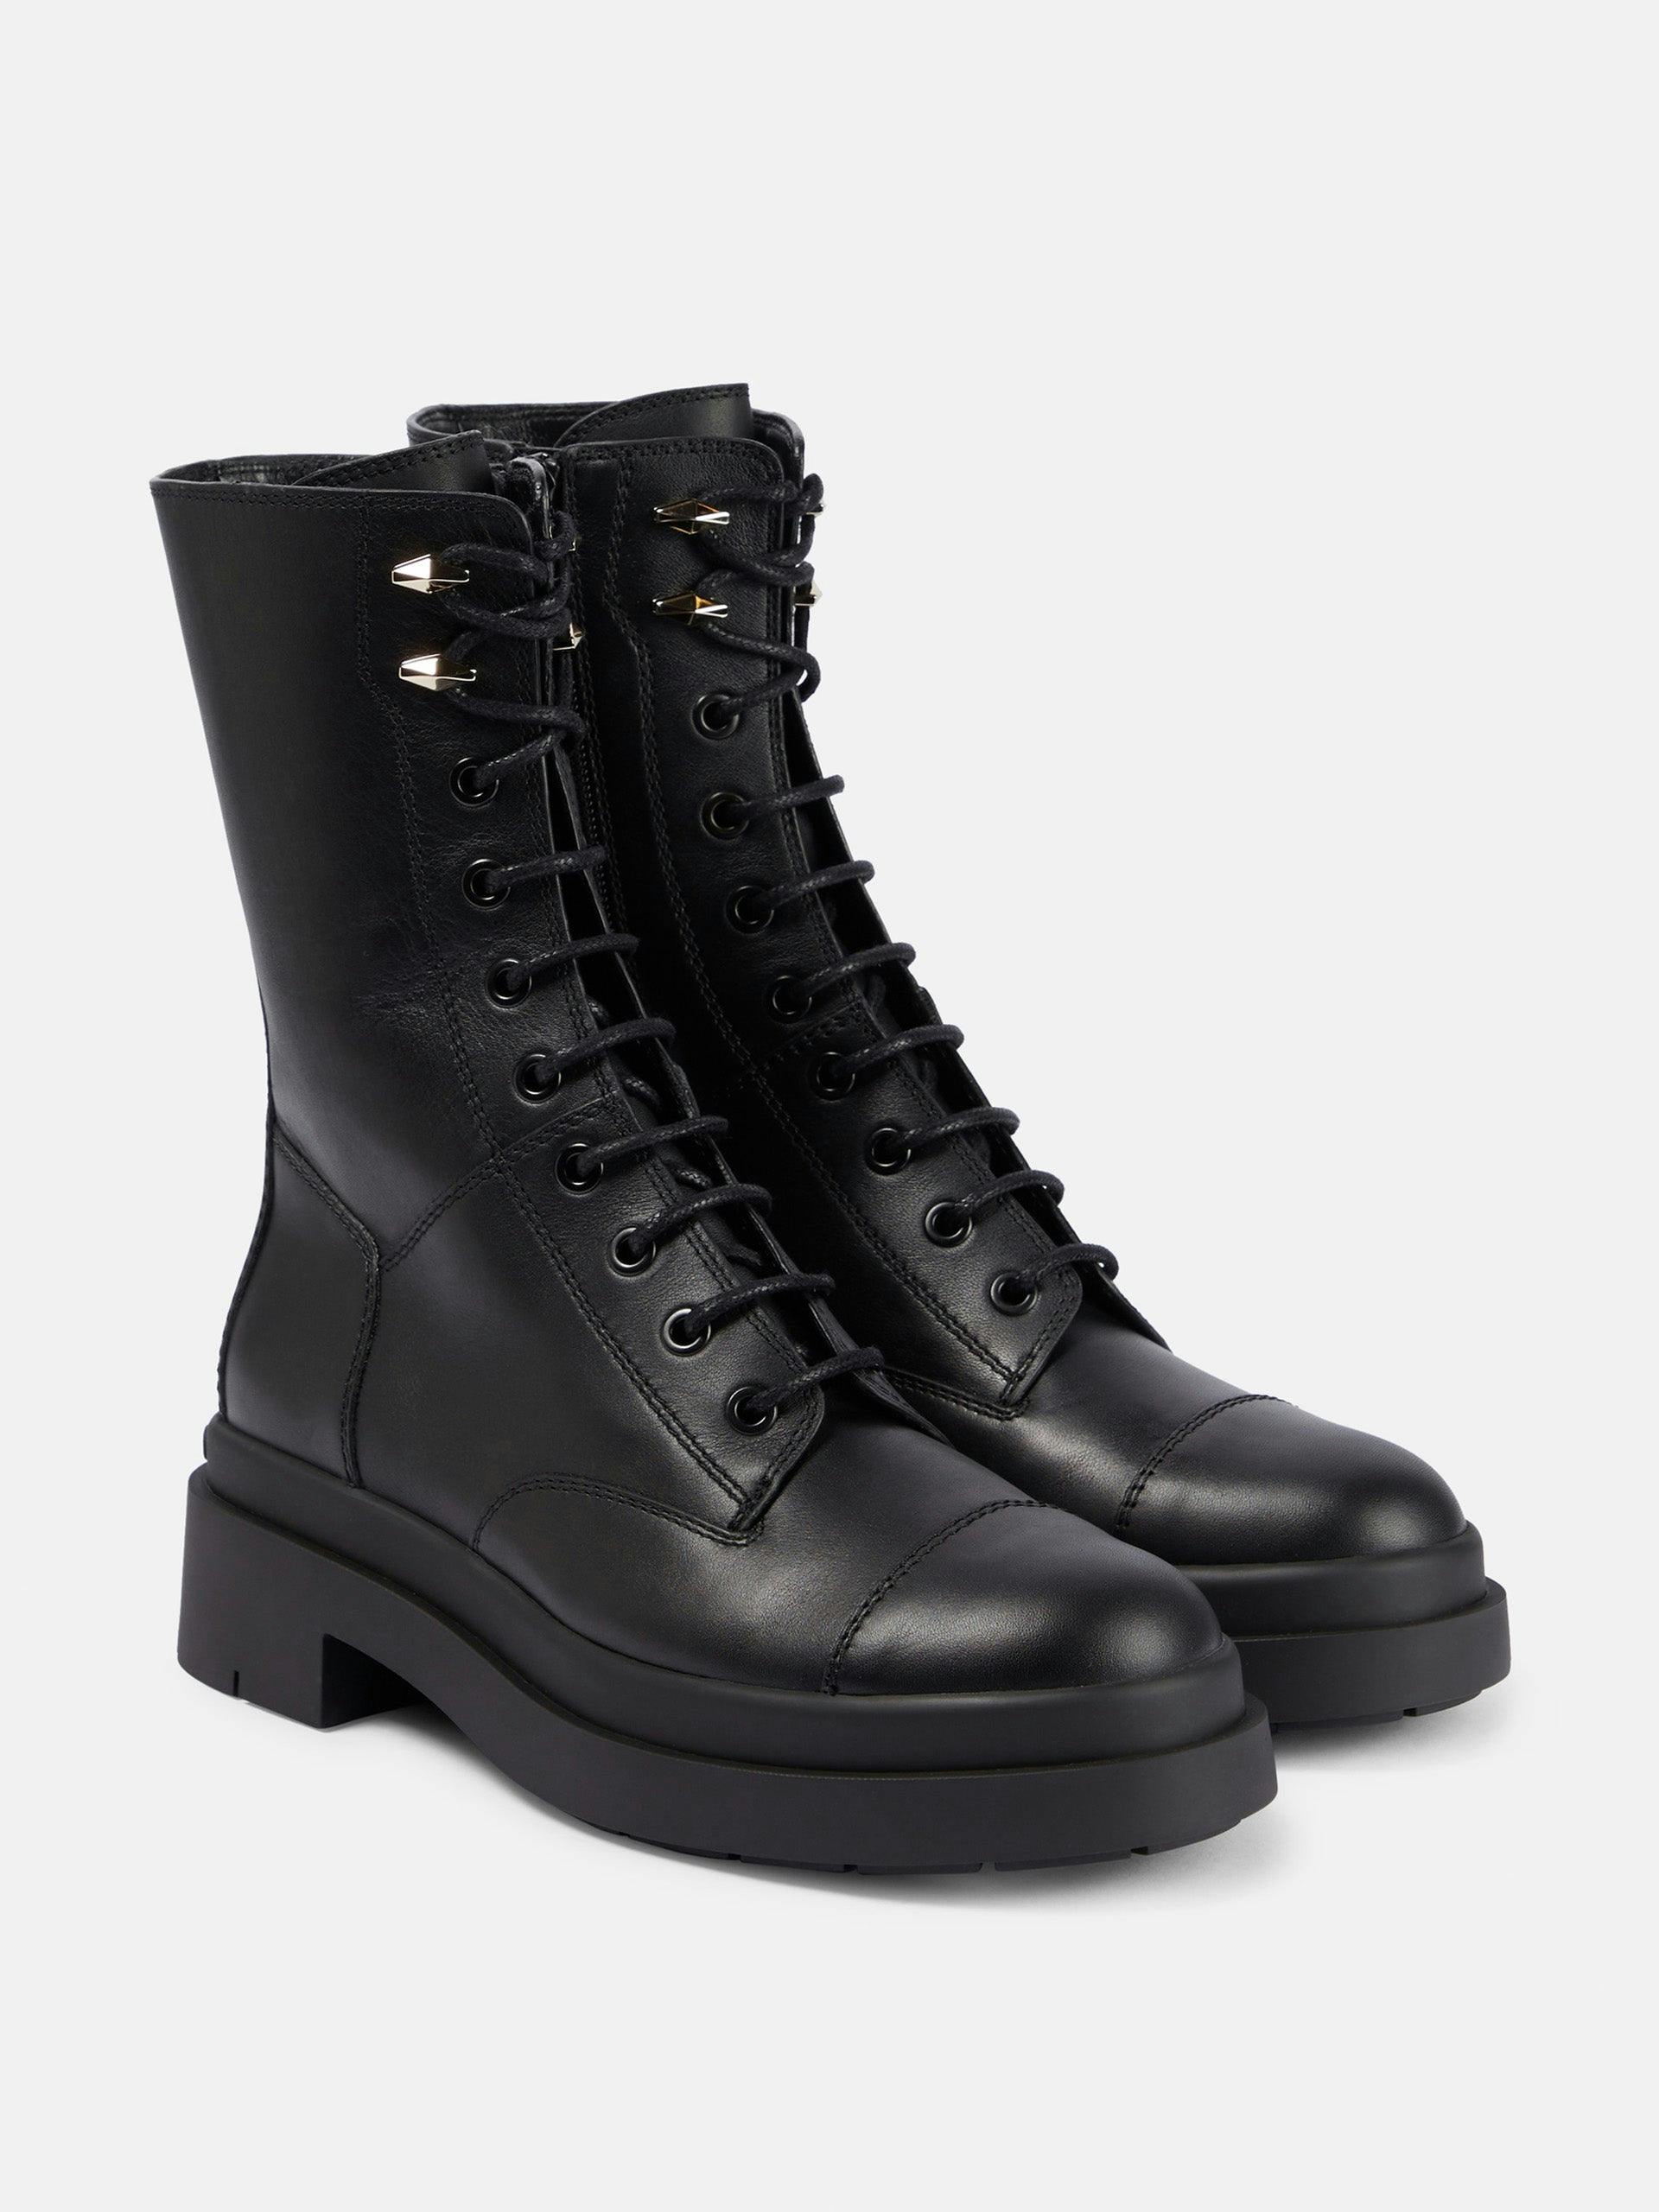 Nari leather mid-calf boots